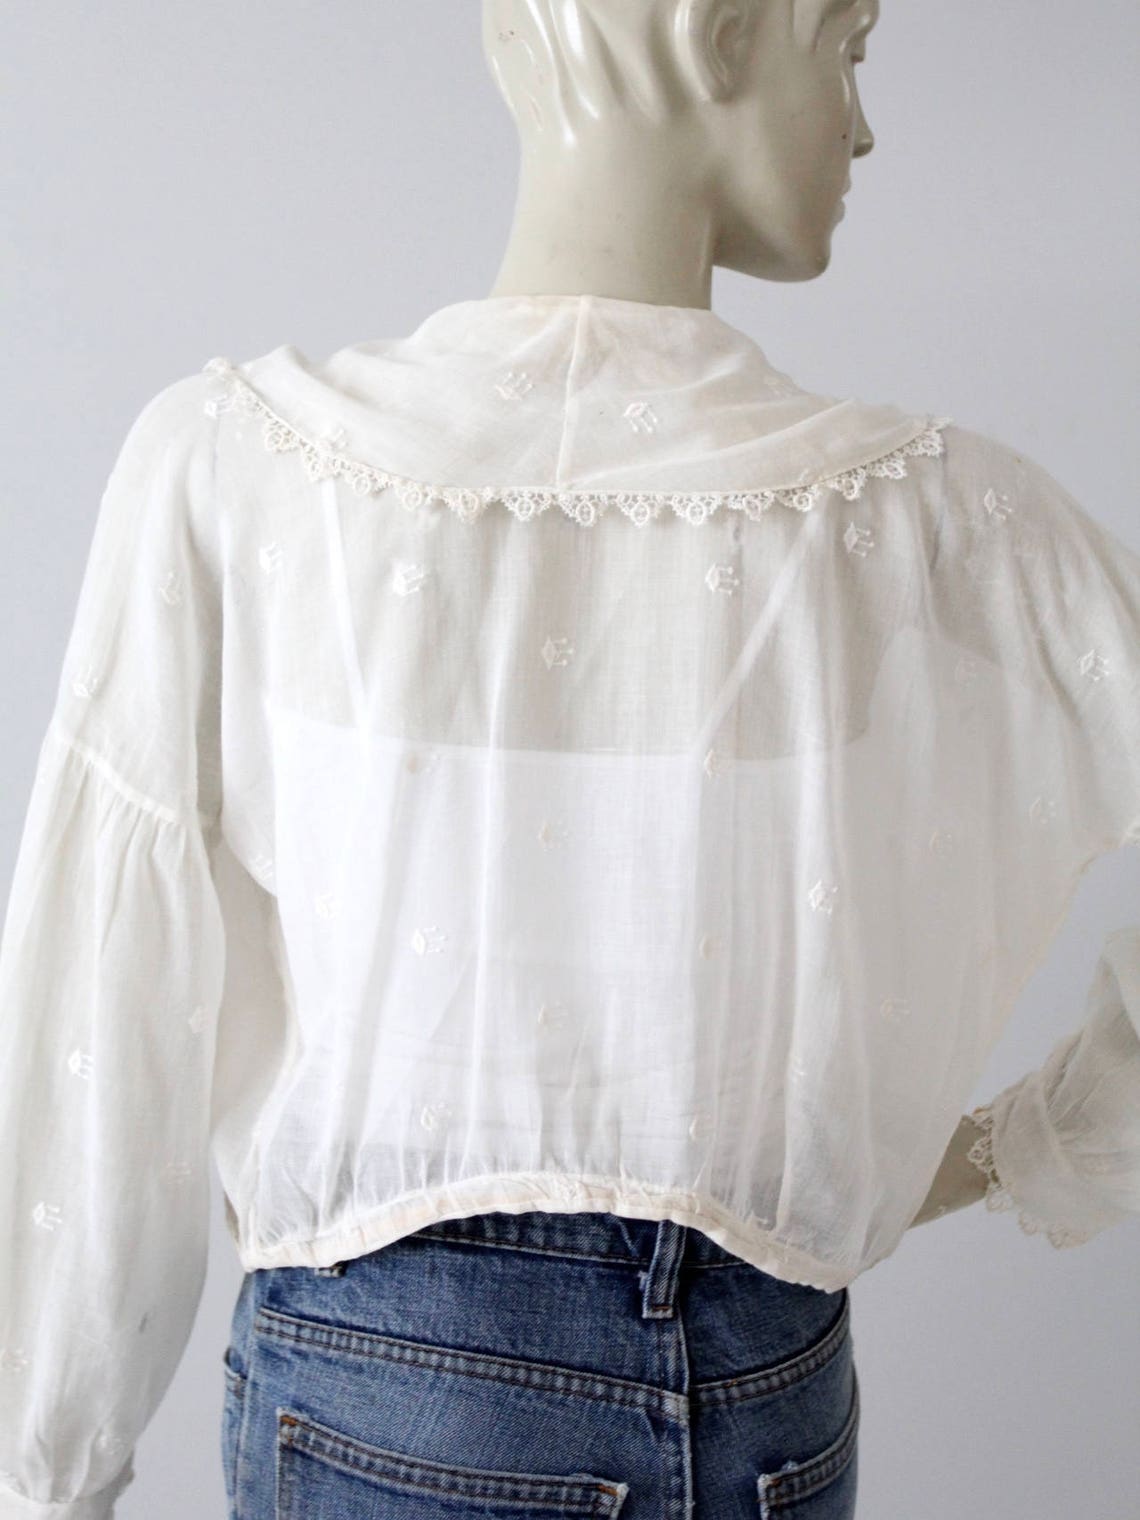 Edwardian blouse 1900s sheer cotton top | Etsy